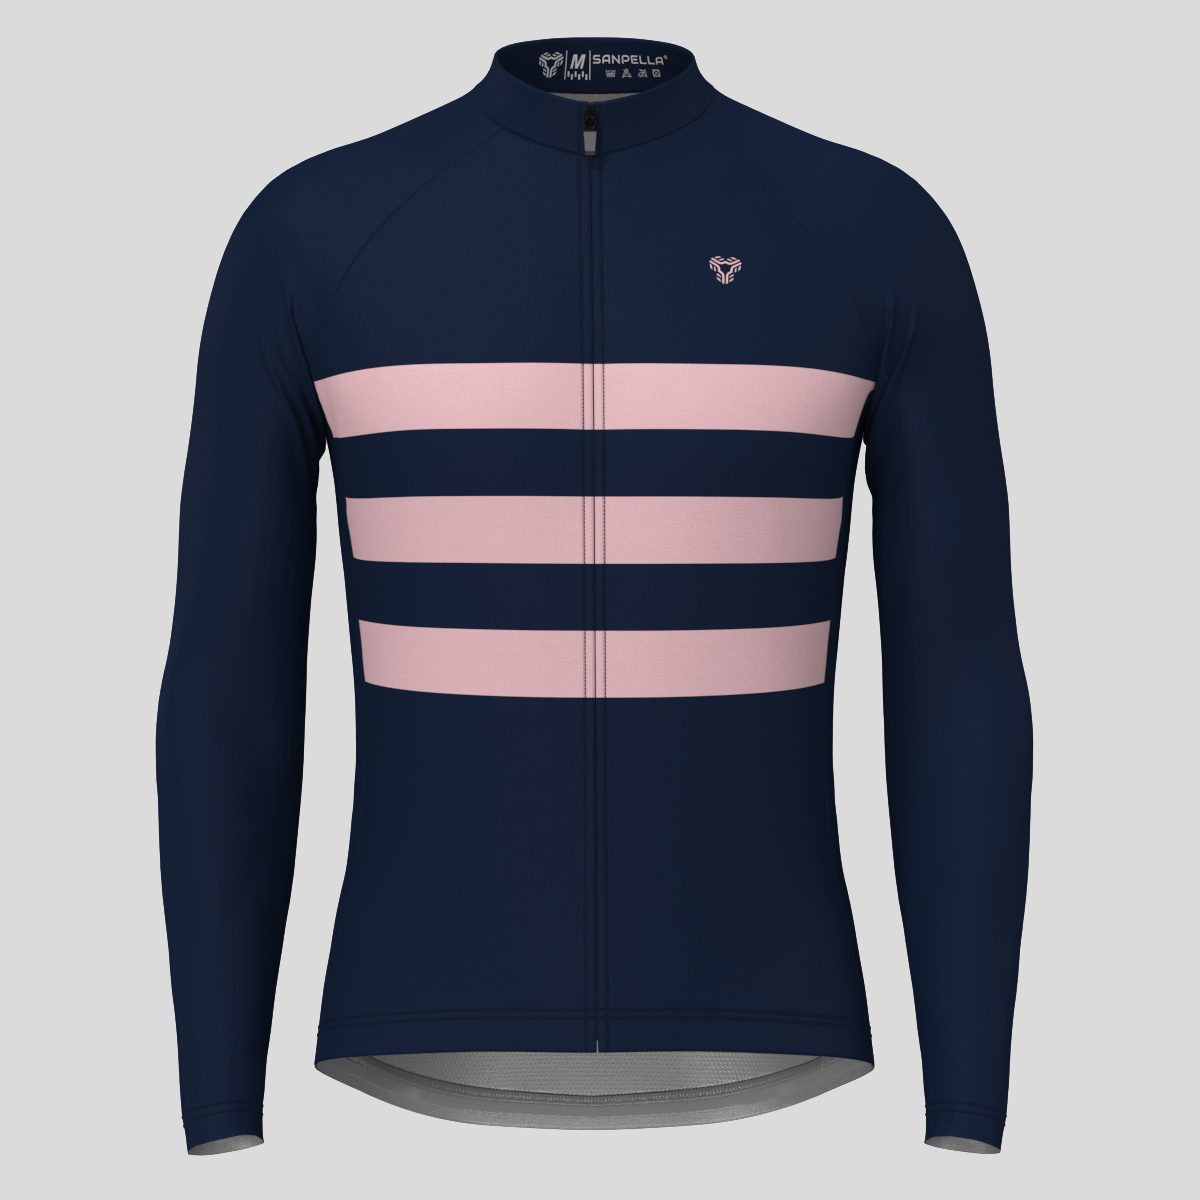 Minimal Stripes Men's LS Cycling Jersey - Navy/Pink